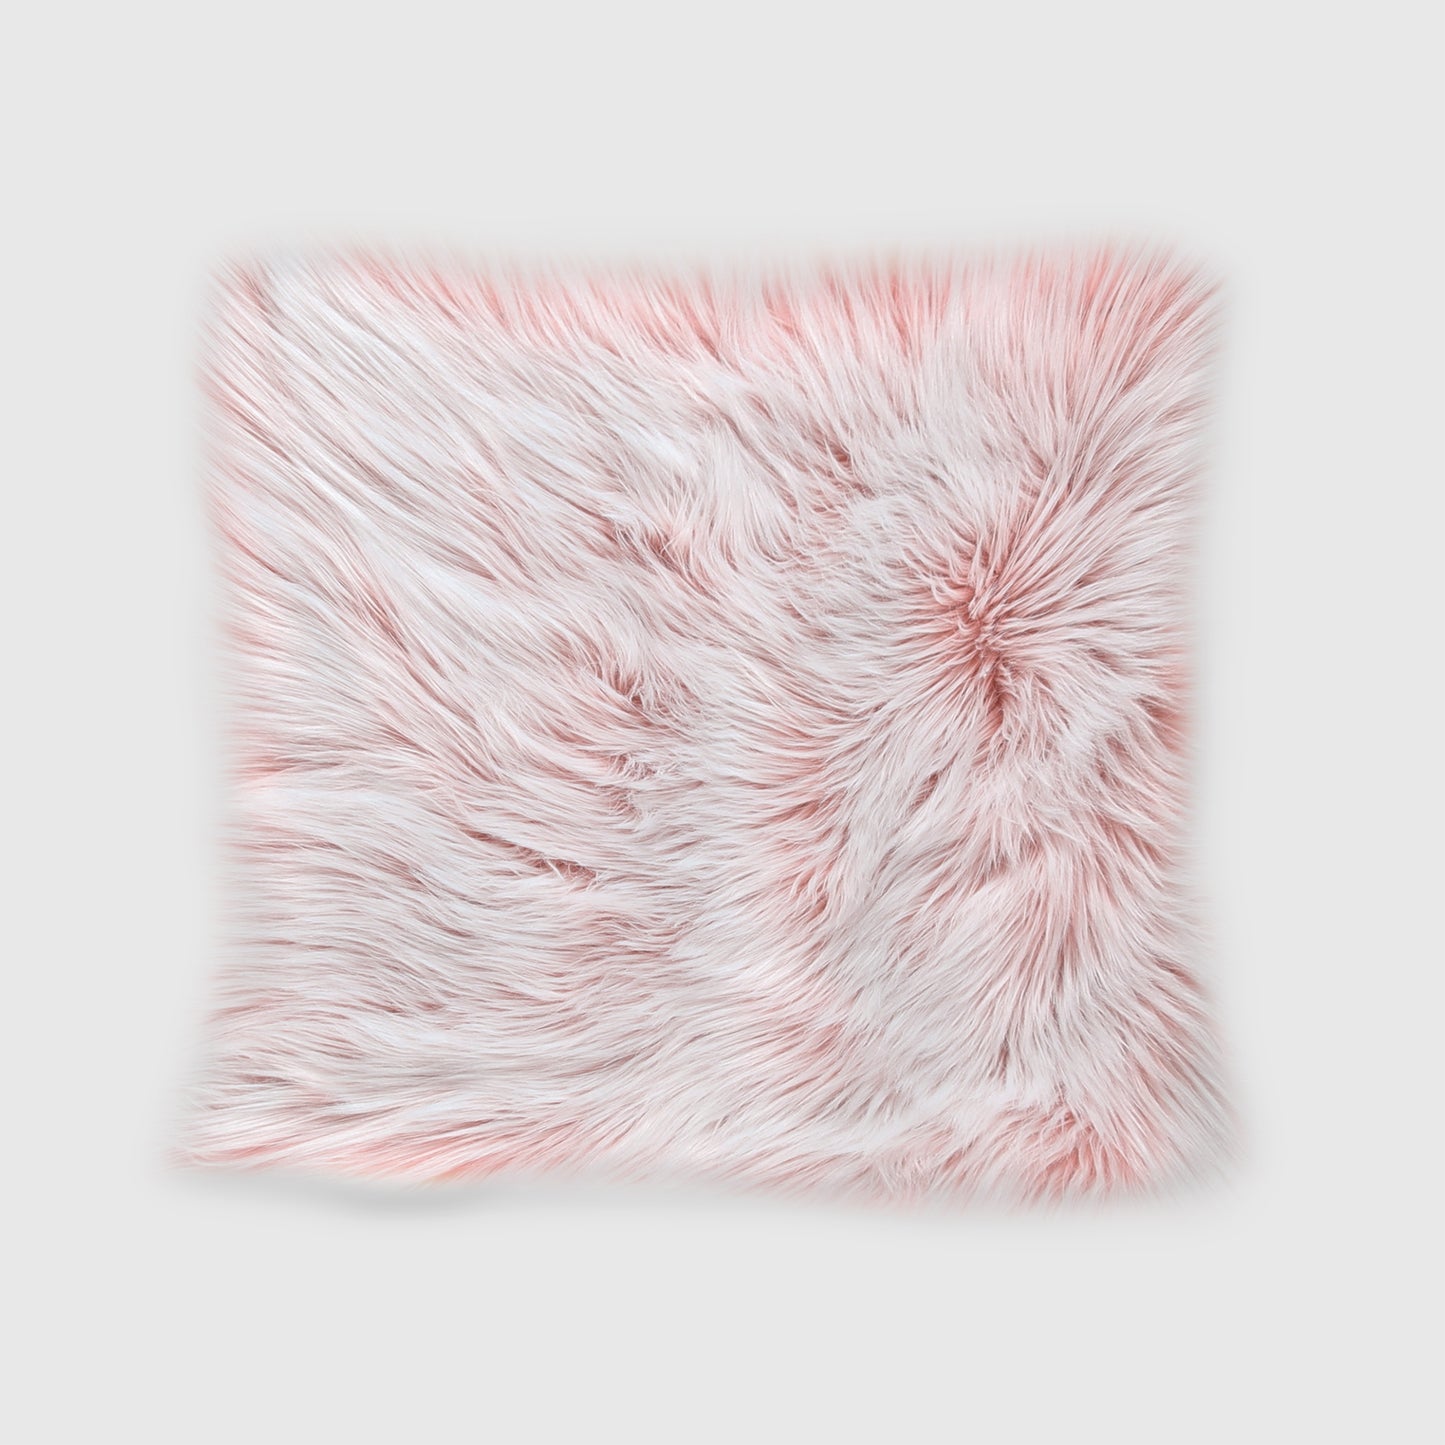 The Mood | Harris Faux Fur 20"x20" Pillow, Candy Floss